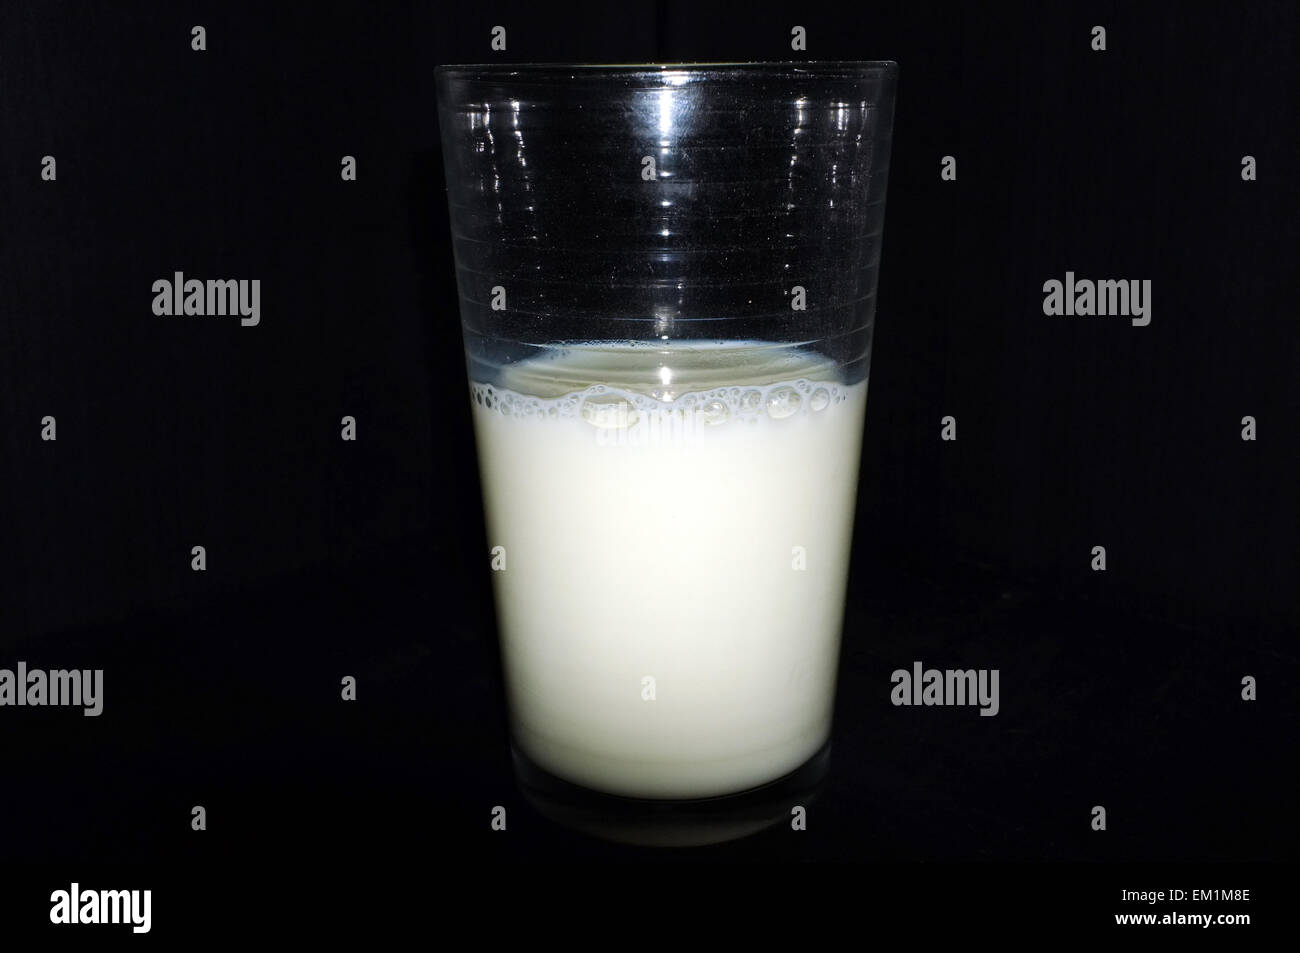 A glass half full/half empty of milk shells against a black background. Stock Photo